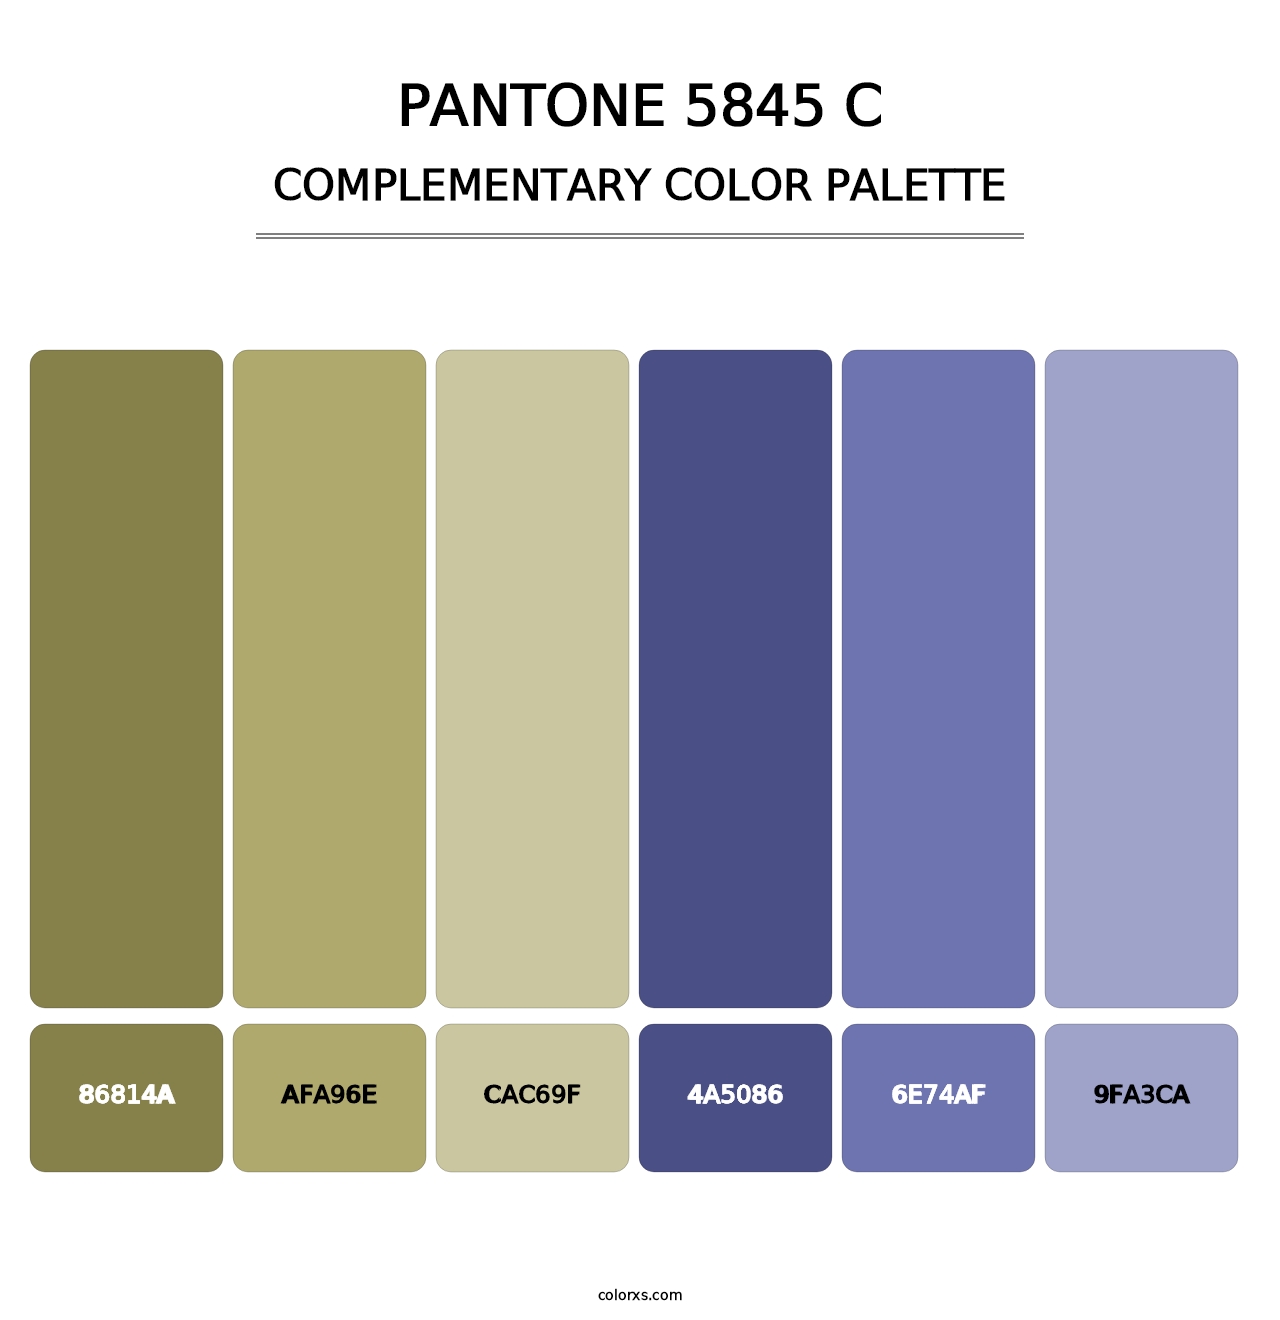 PANTONE 5845 C - Complementary Color Palette